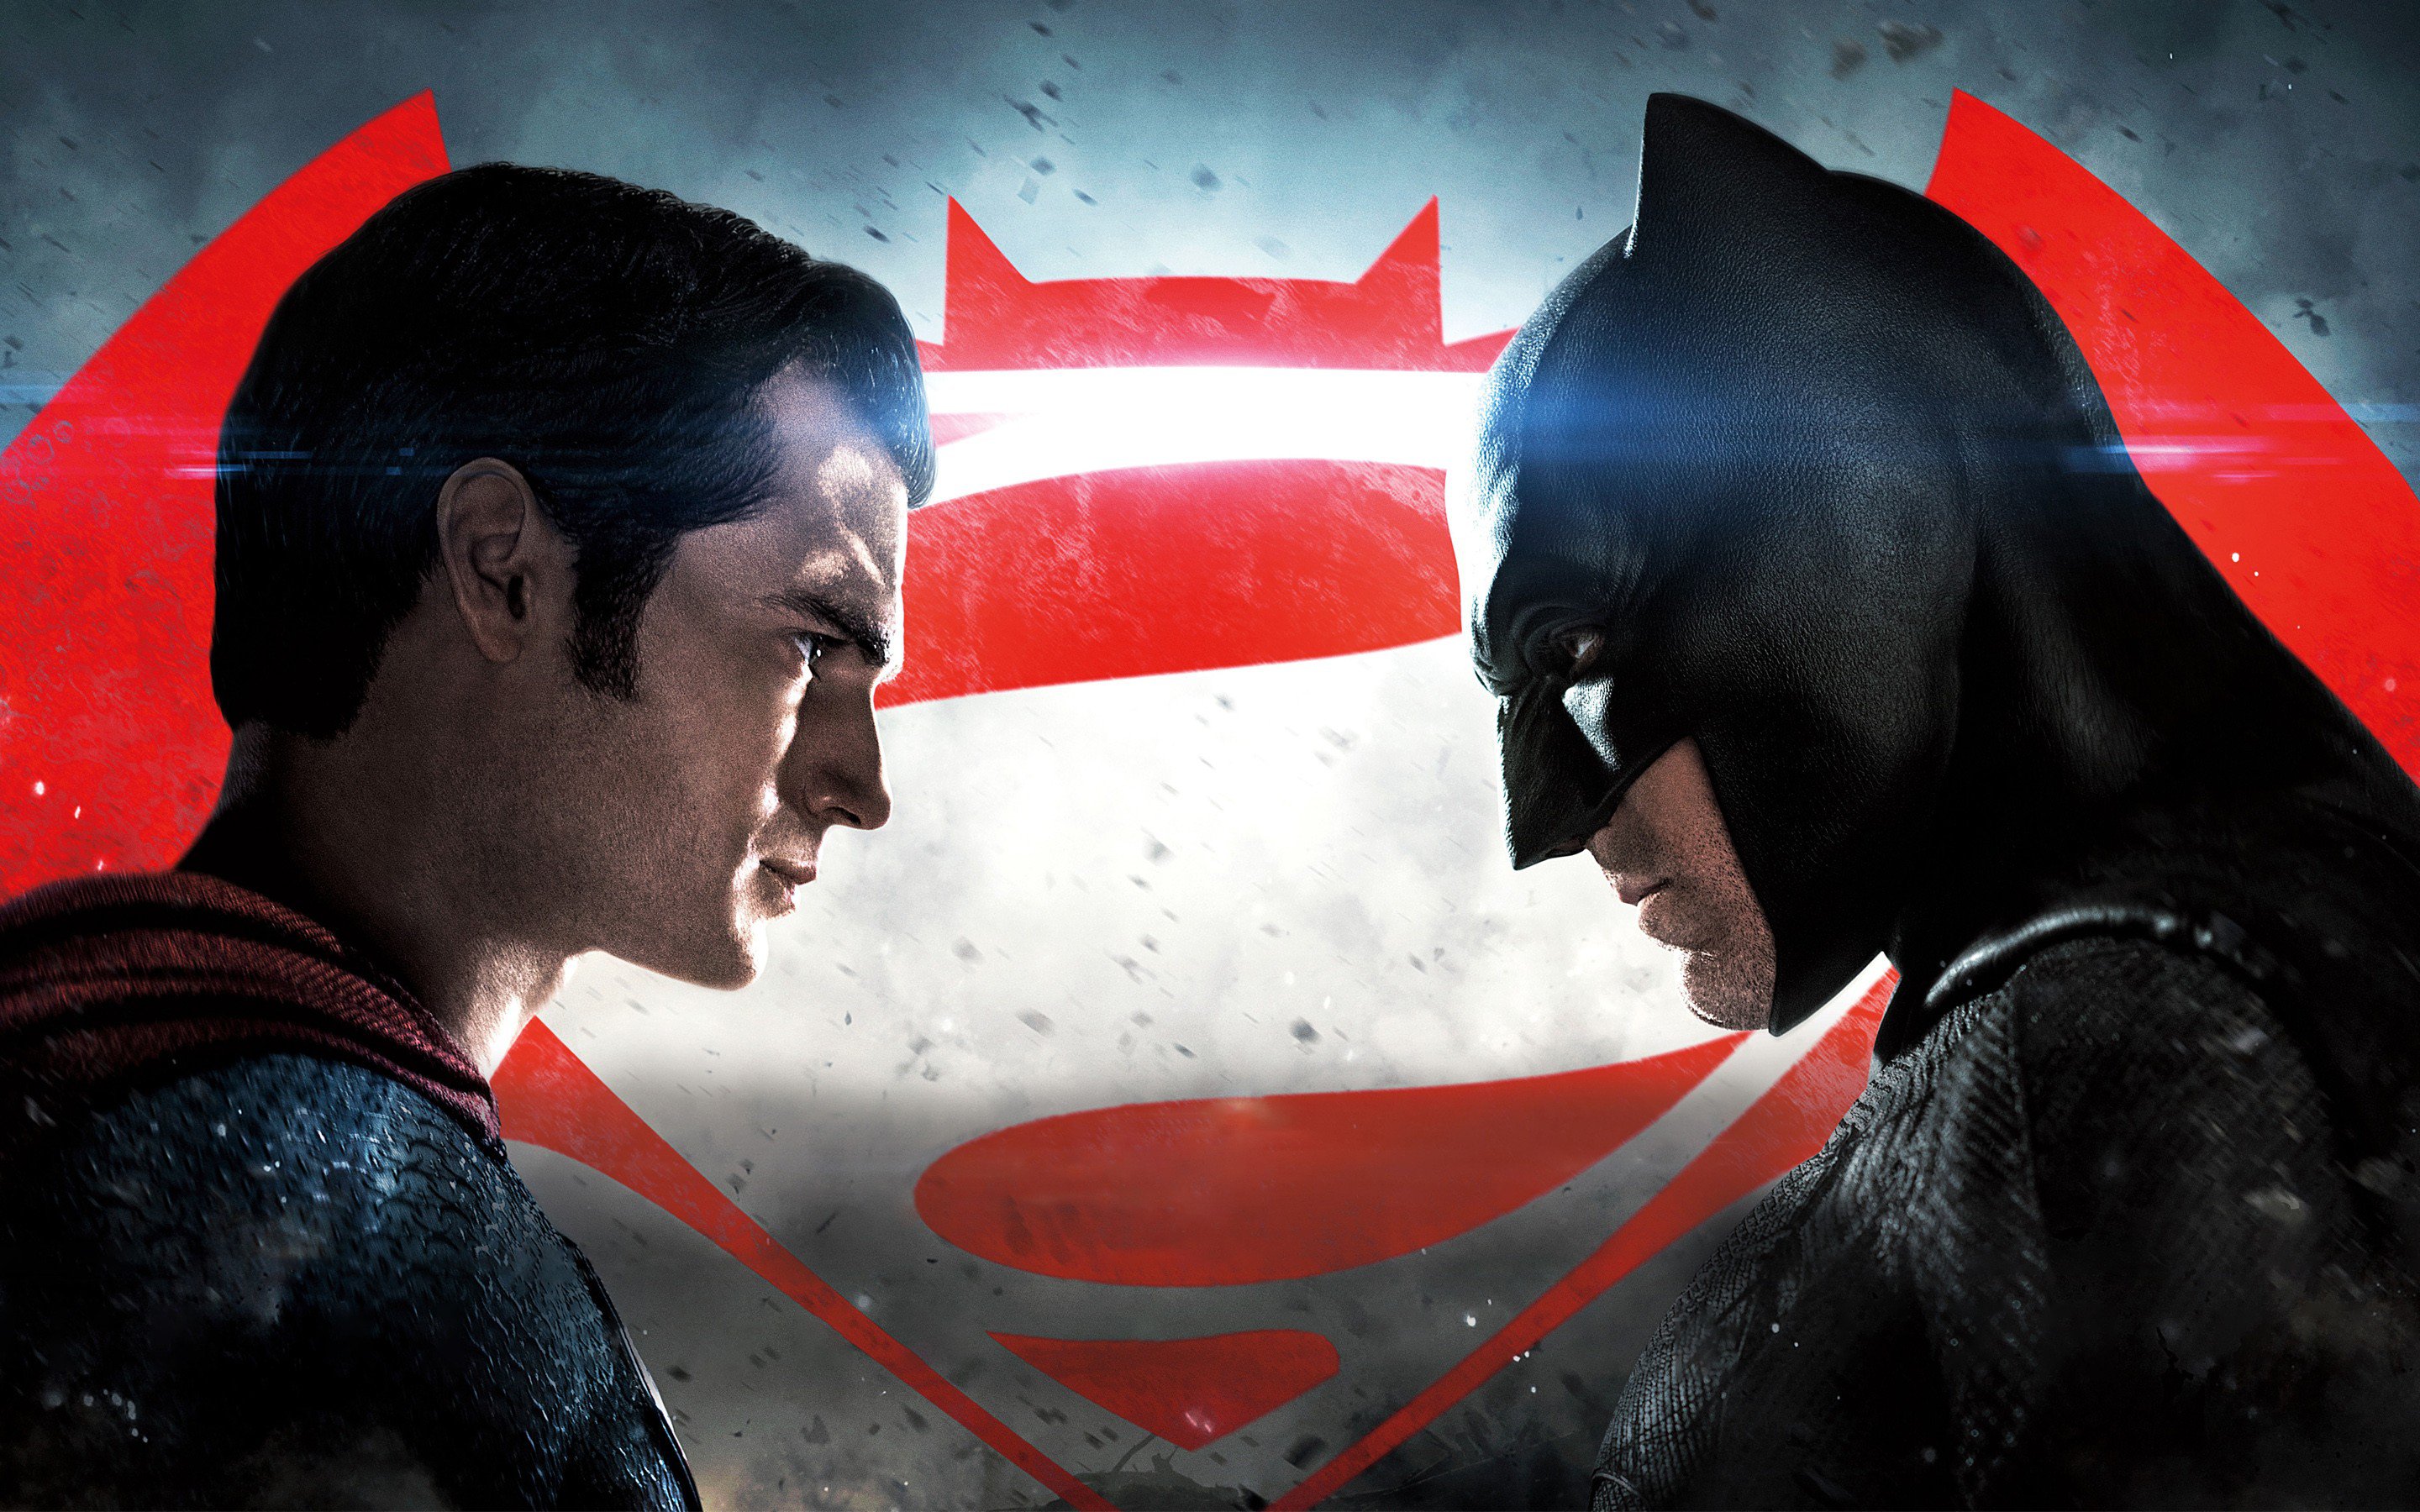 Batman And Superman Wallpaper Background HD Download Free | PixelsTalk.Net